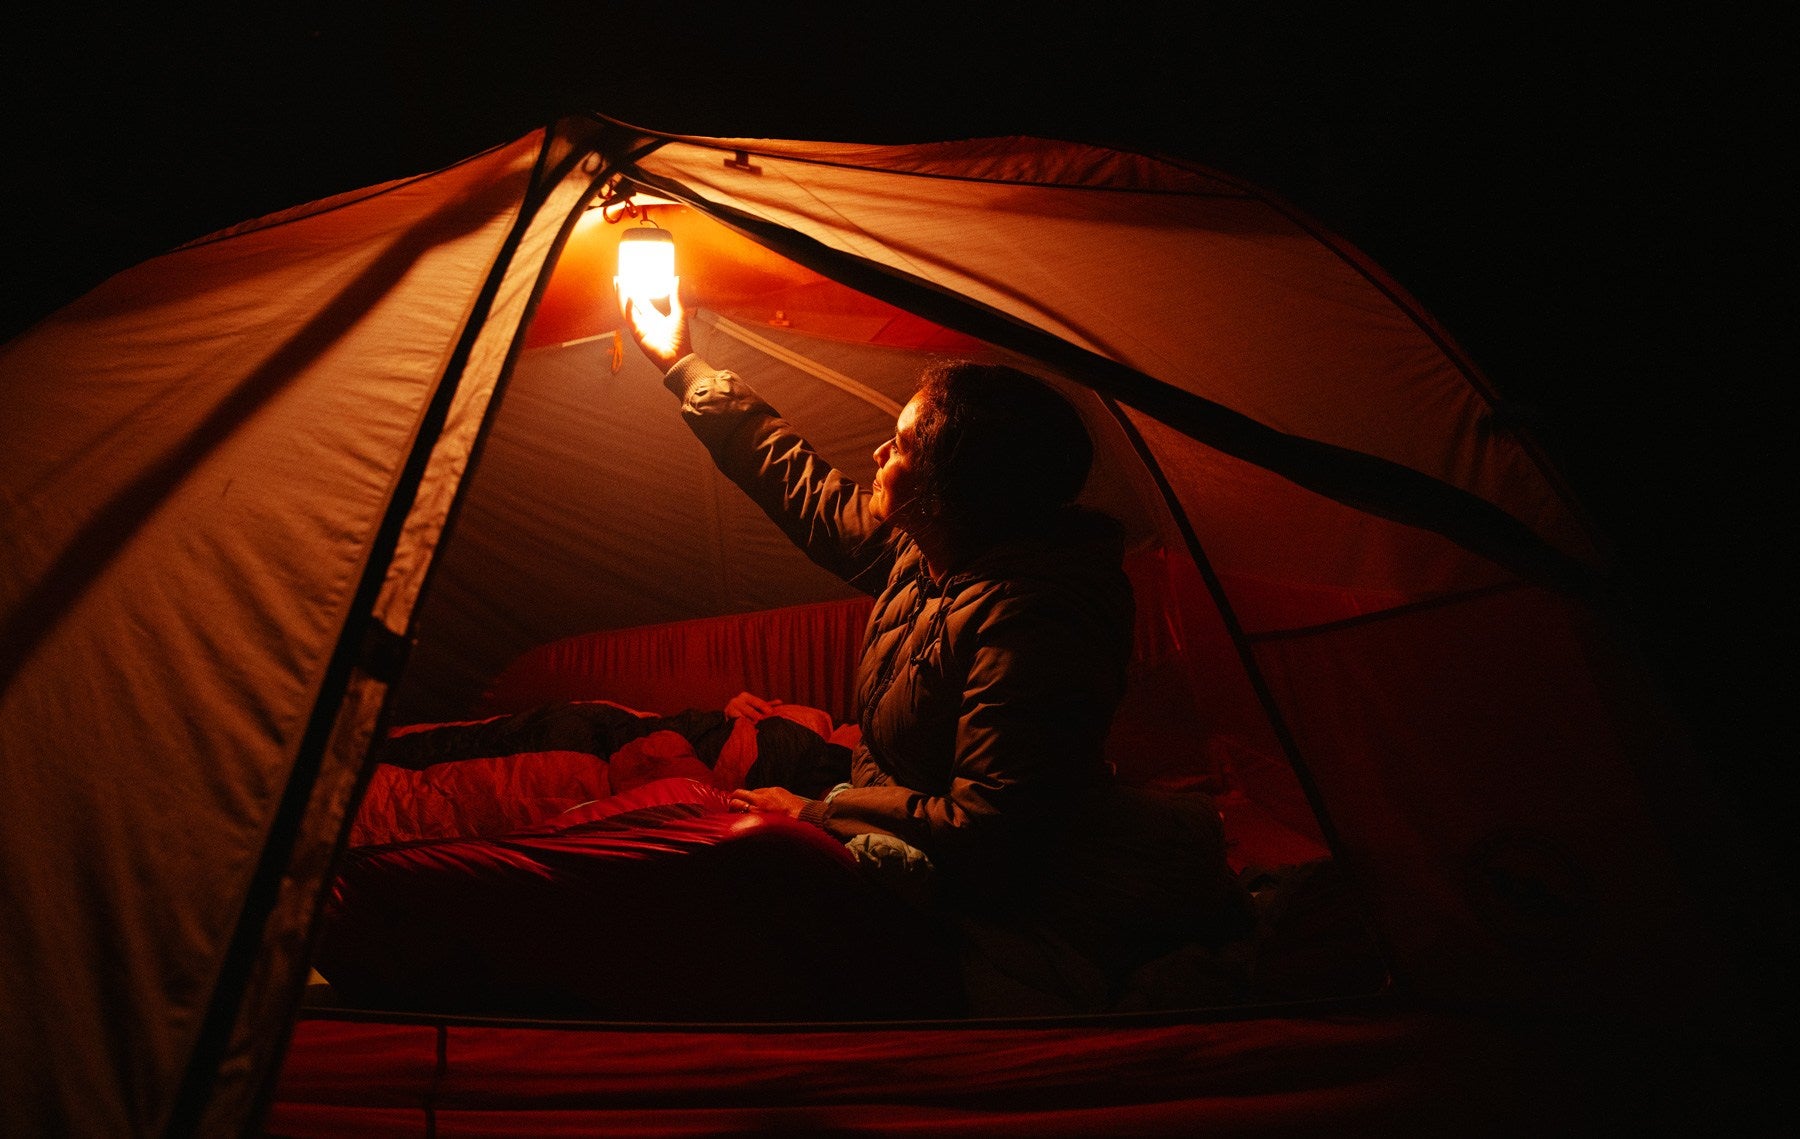 Cool Camp Lighting Ideas — 1000Bulbs Blog